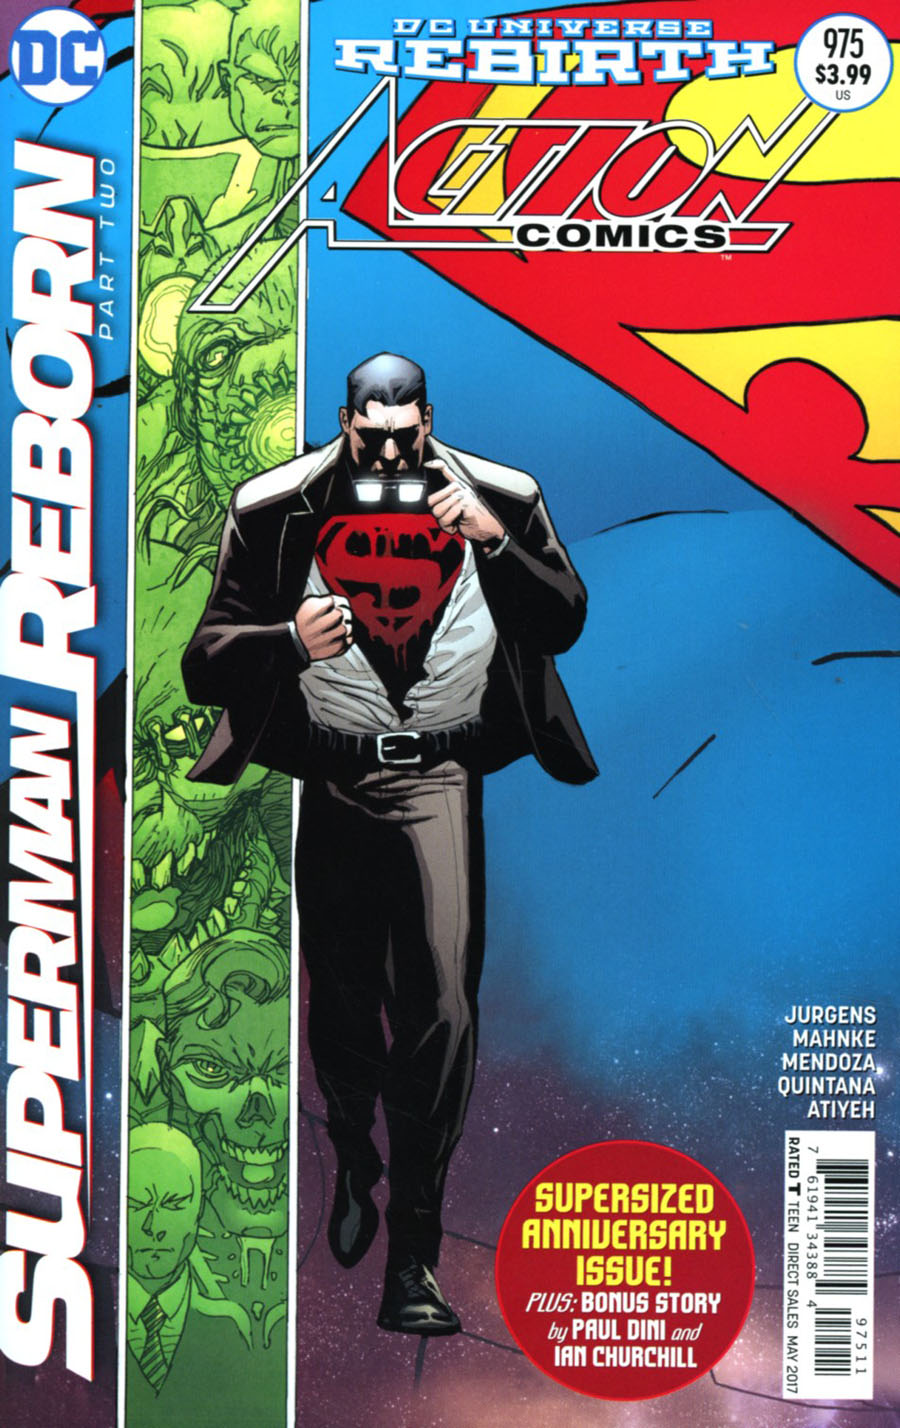 Action Comics Vol 2 #975 Cover A Regular Patrick Gleason & Mick Gray Cover (Superman Reborn Part 2)